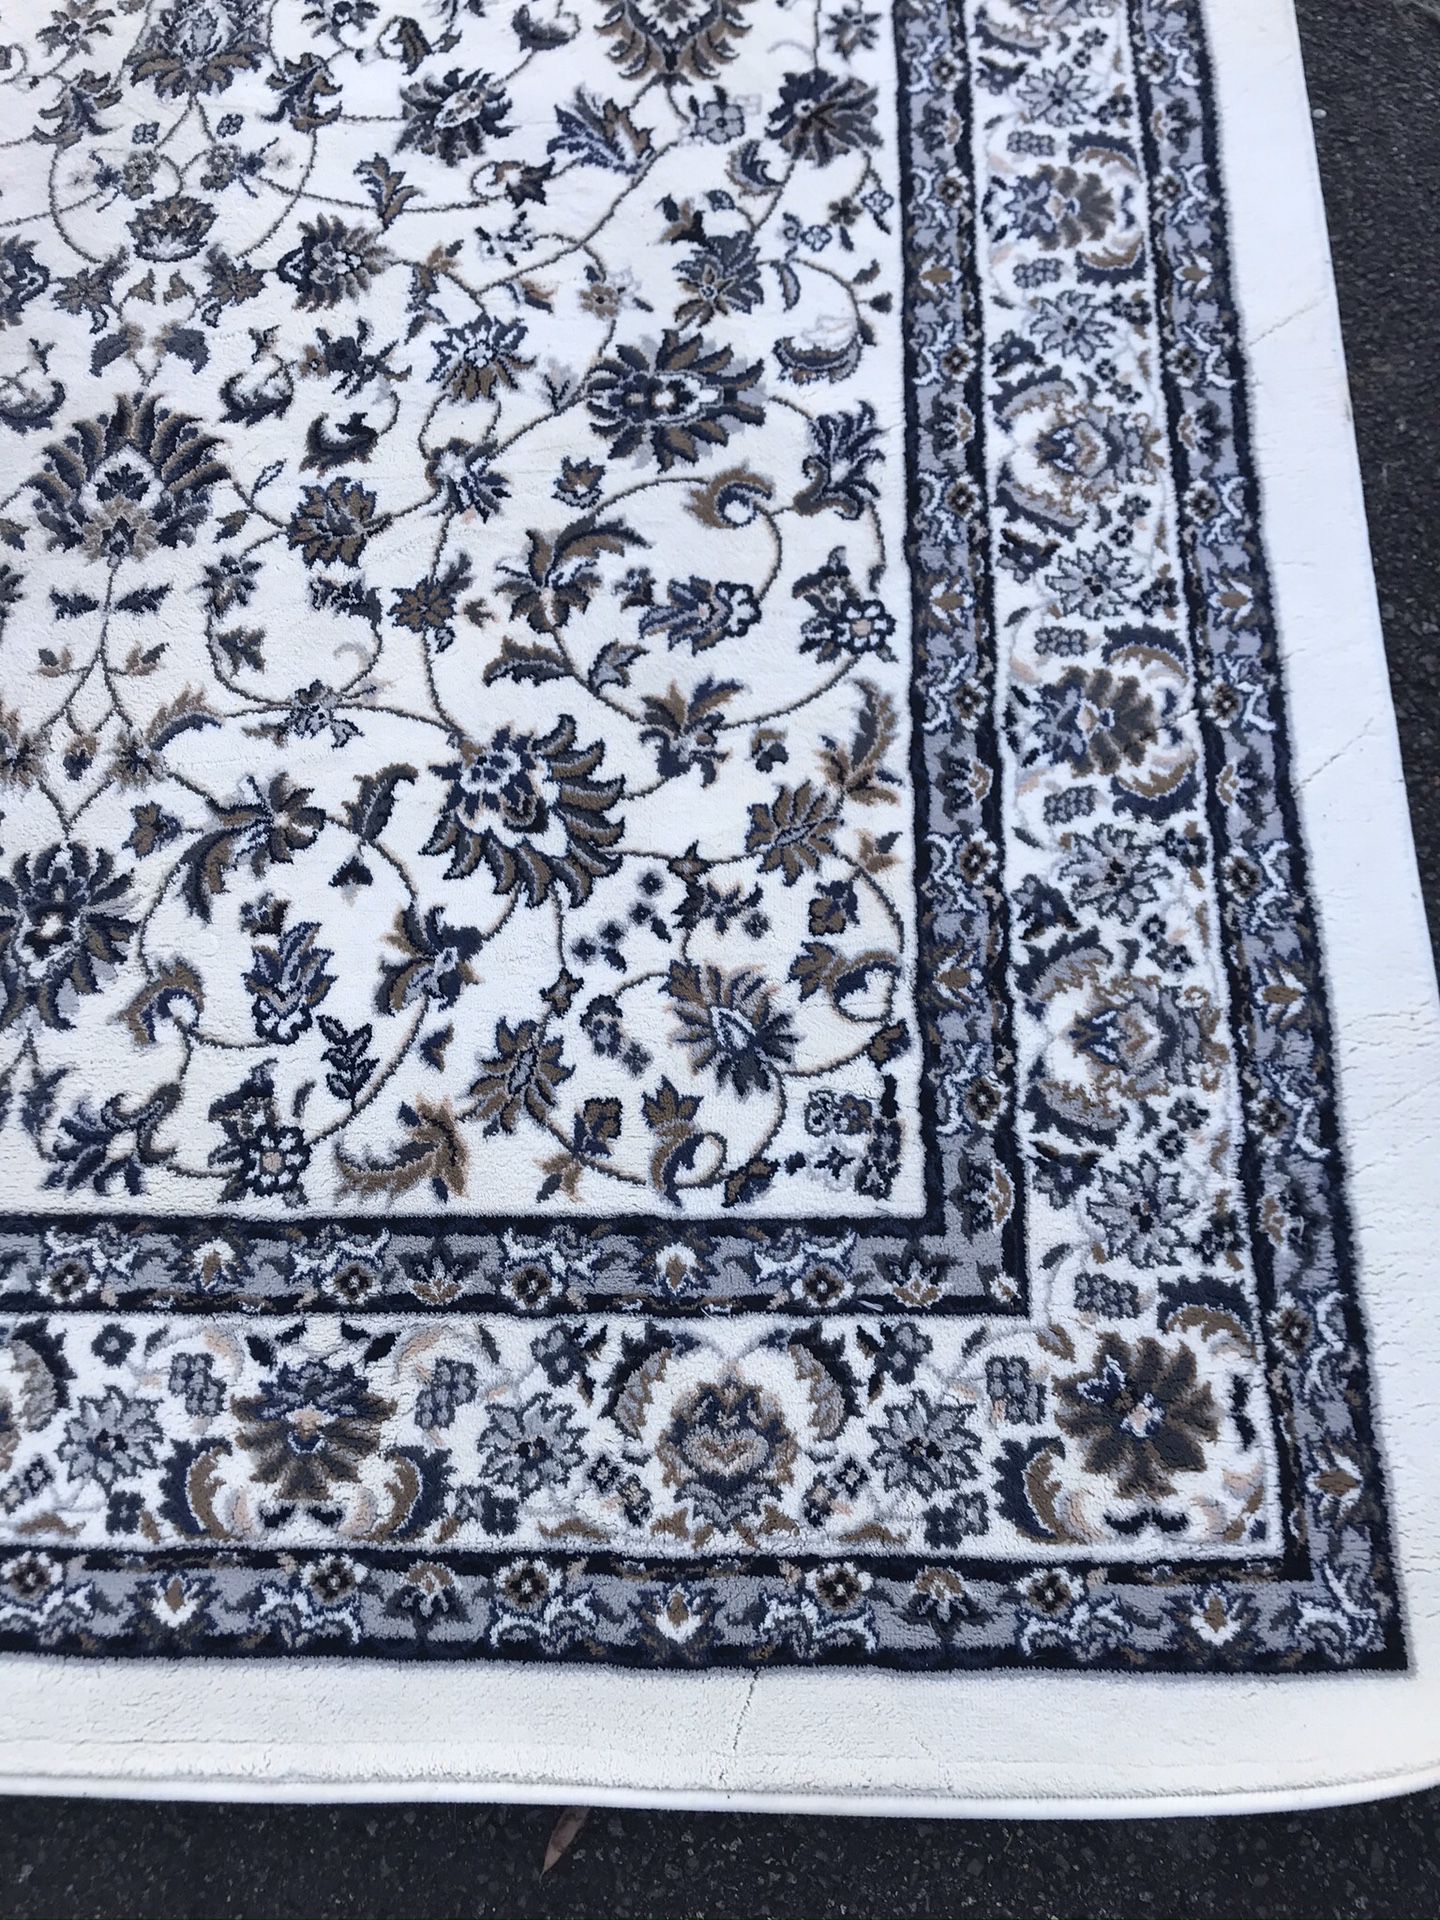 White and blue carpet